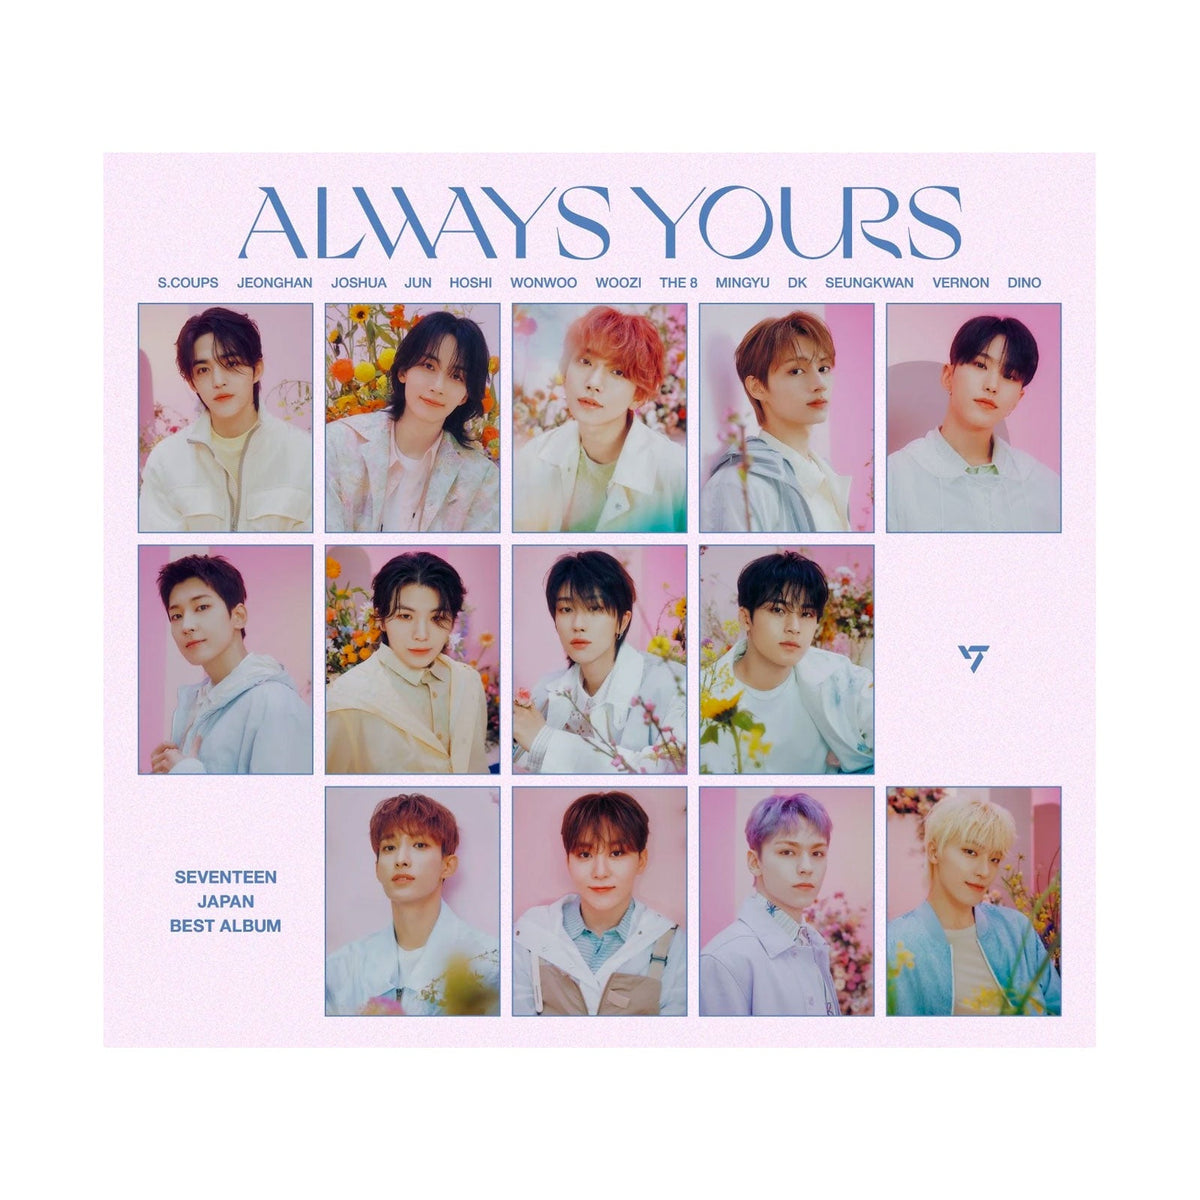 Seventeen - Seventeen Japan Best Album [Always Yours] Limited Edition A